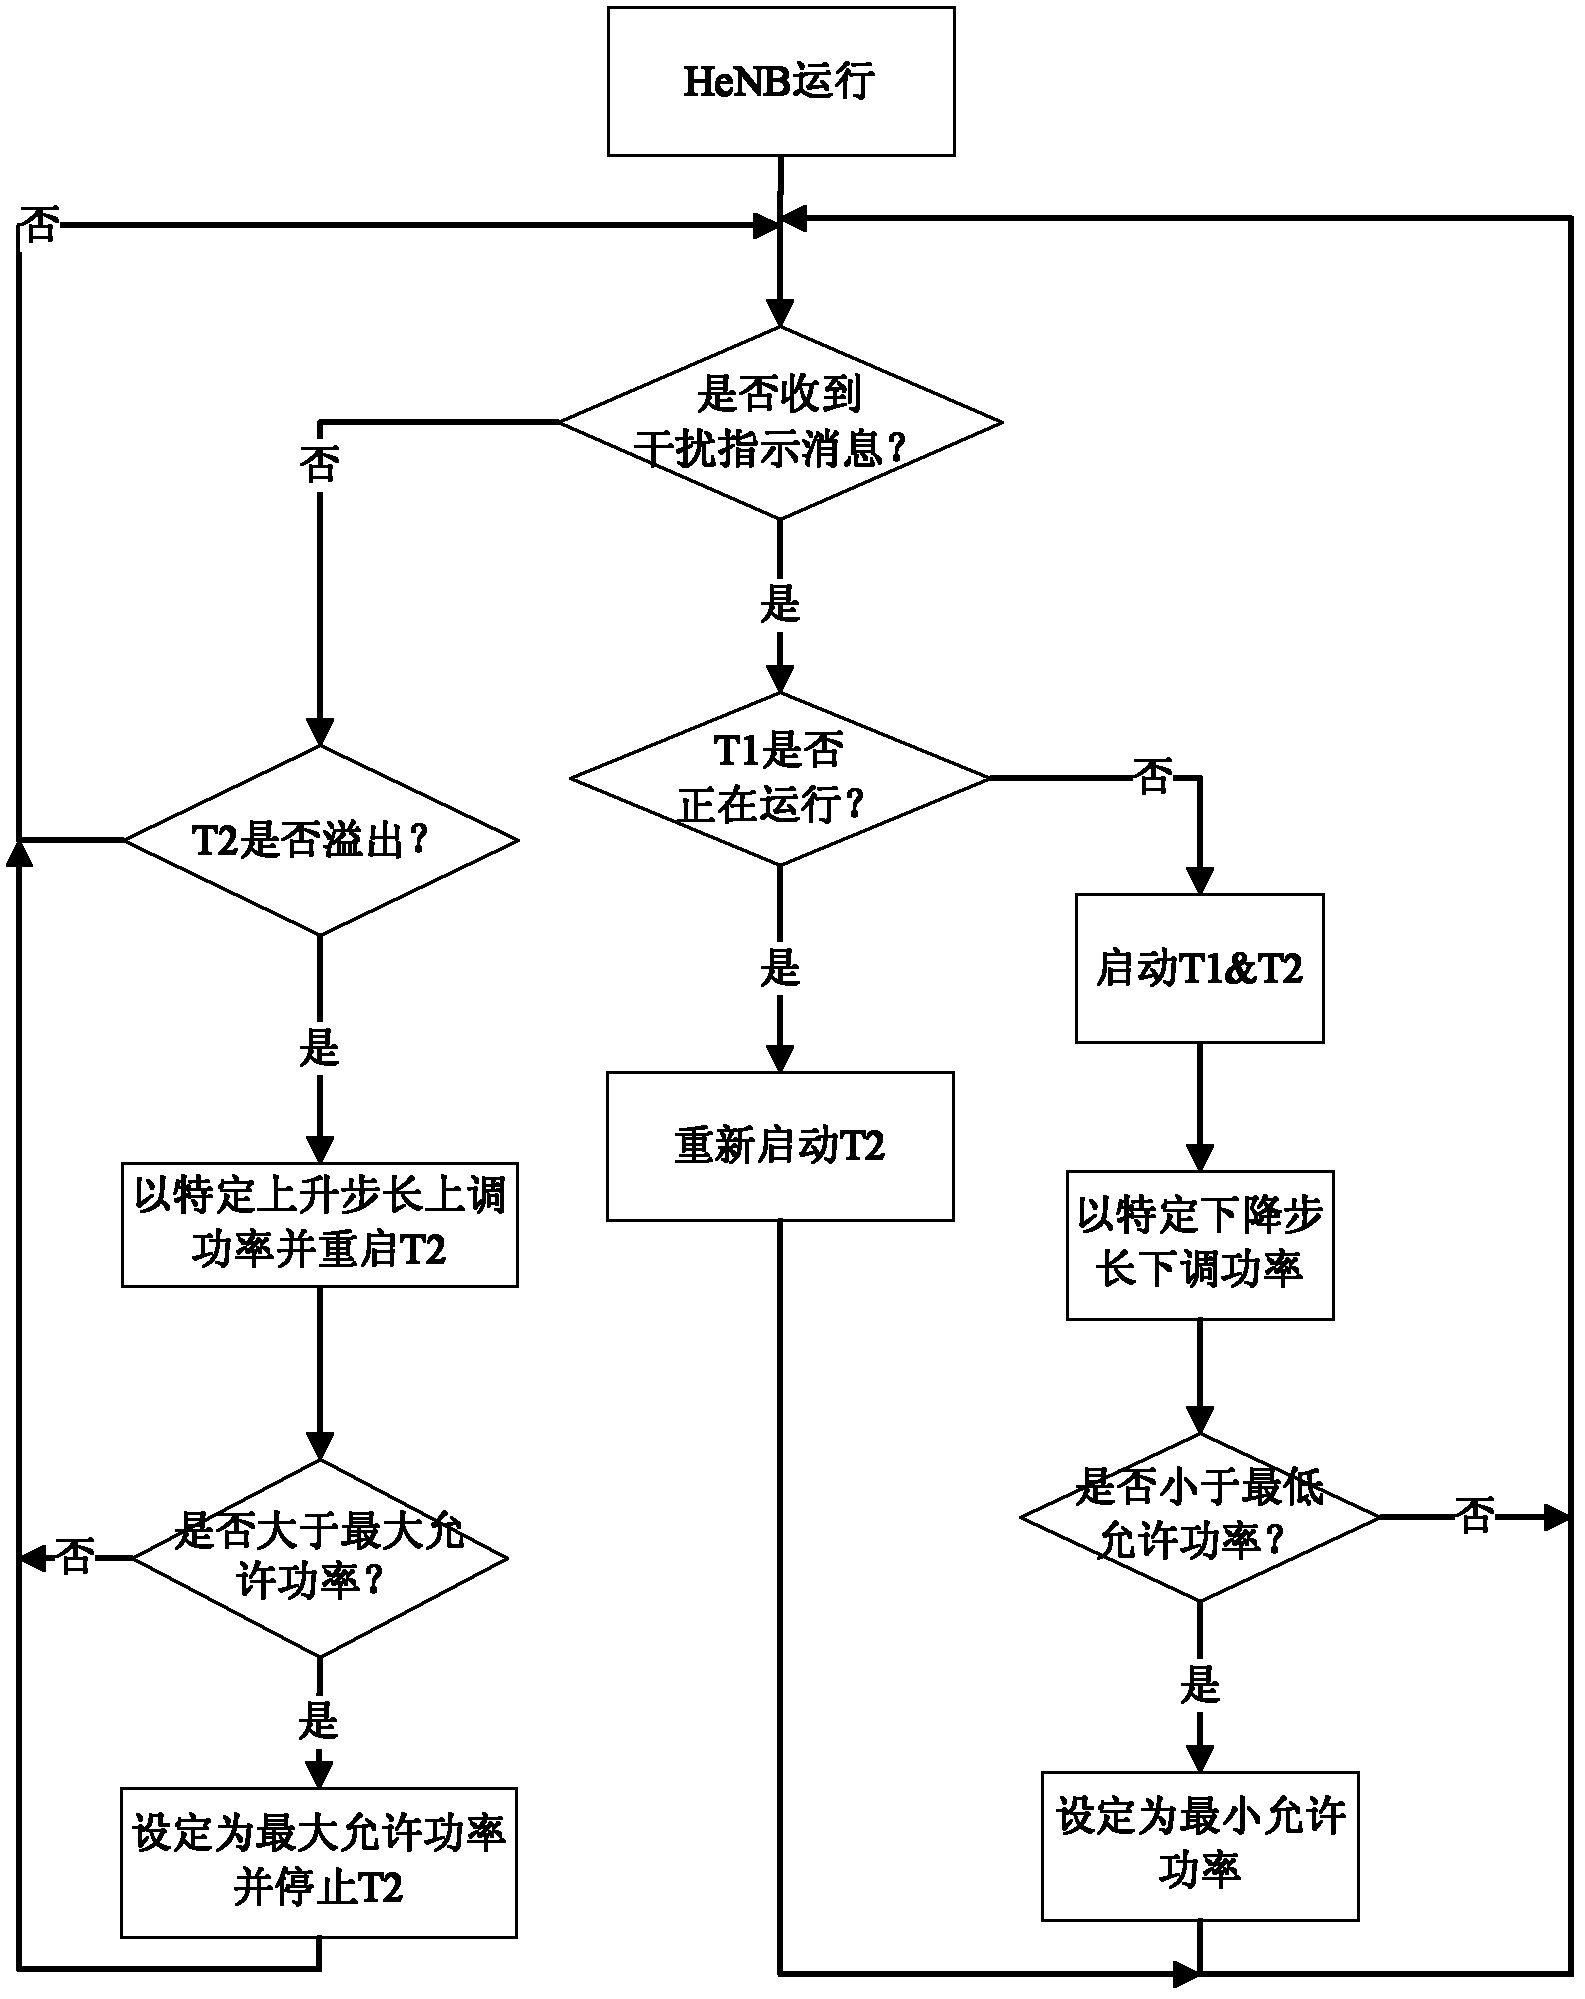 Self-adaptive home base station power control method